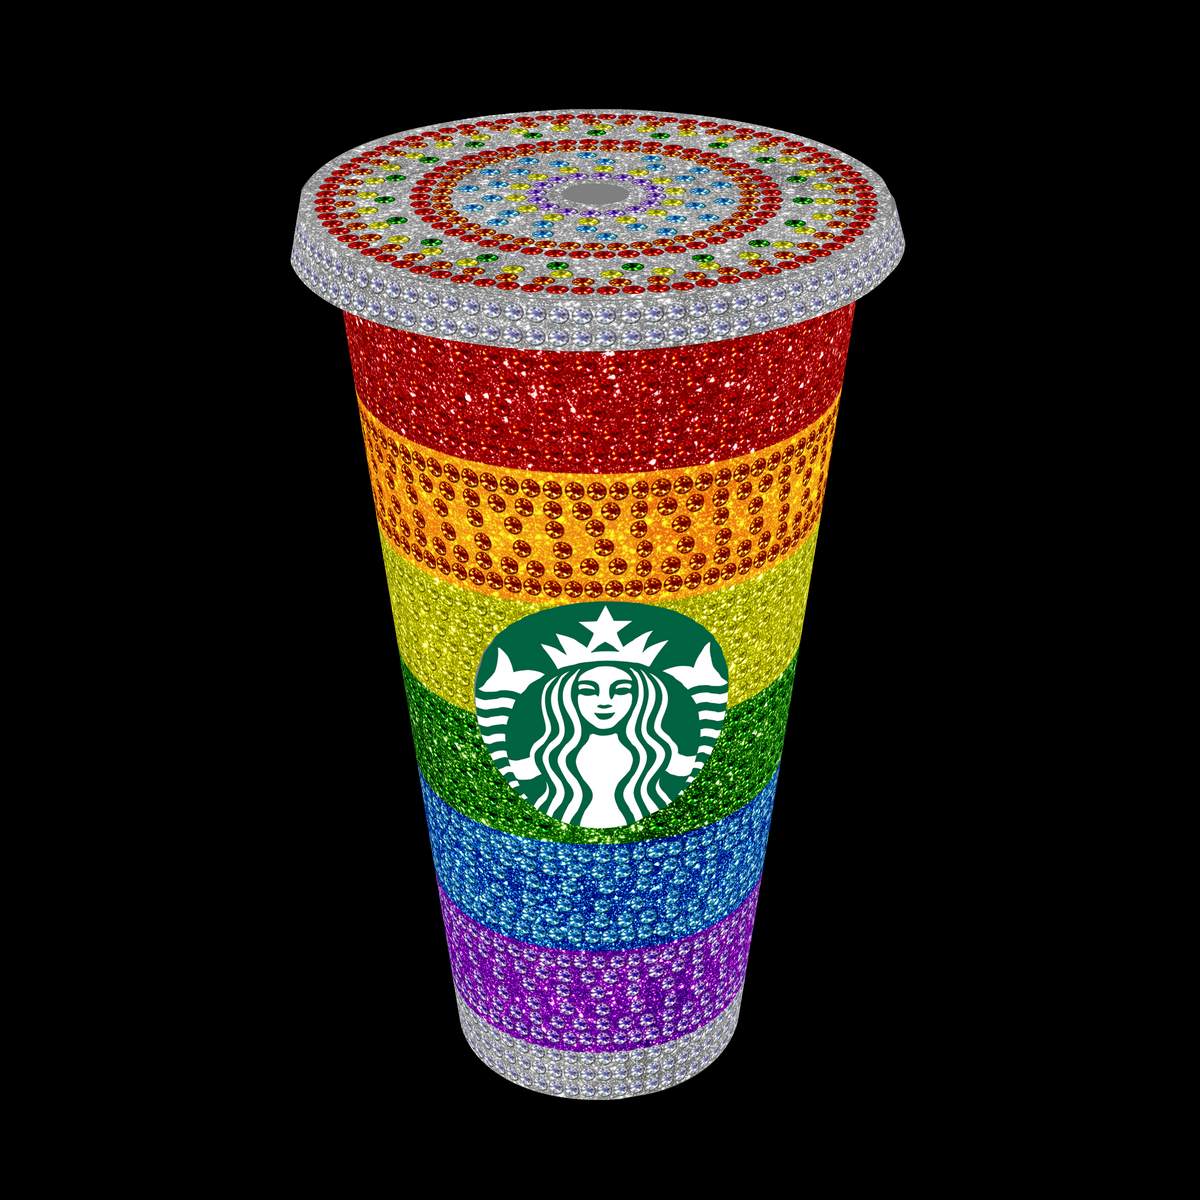 12 Colors Rainbow Rhinestones Kit – One Stop Cups